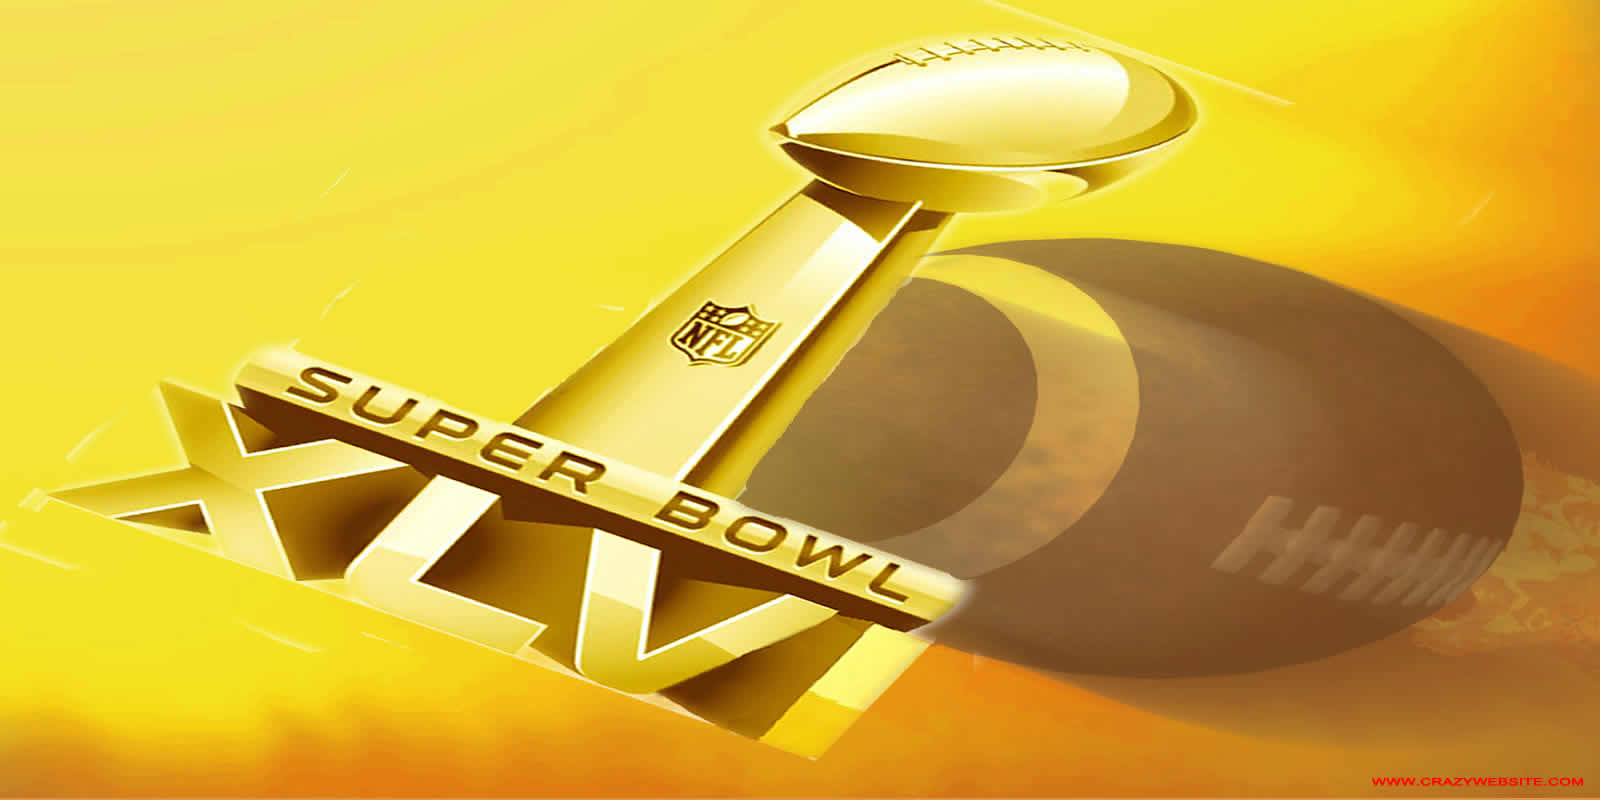 Super Bowl Sunday Clip Art